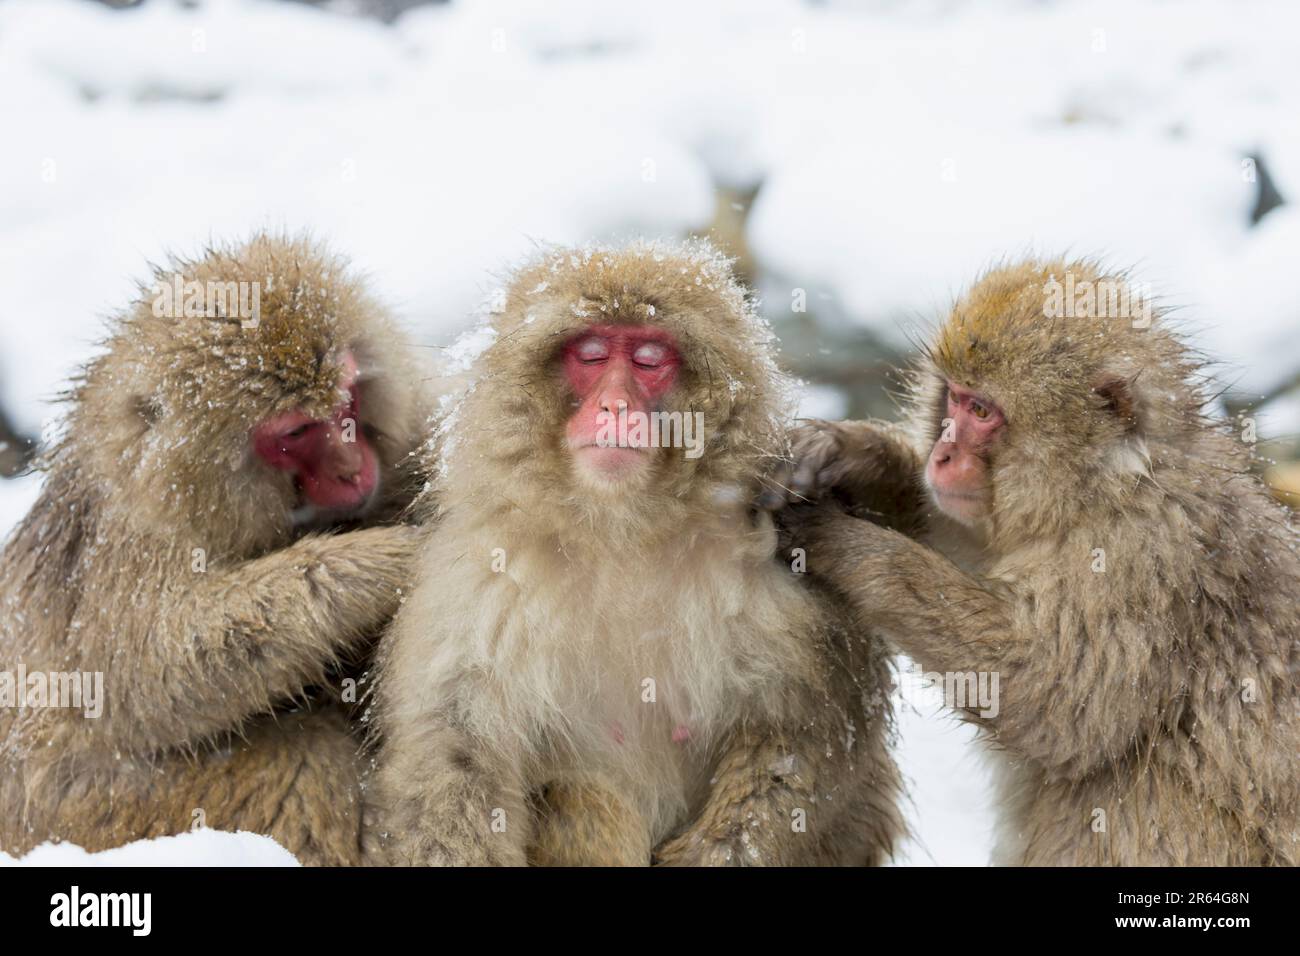 A Japanese monkey grooming itself Stock Photo